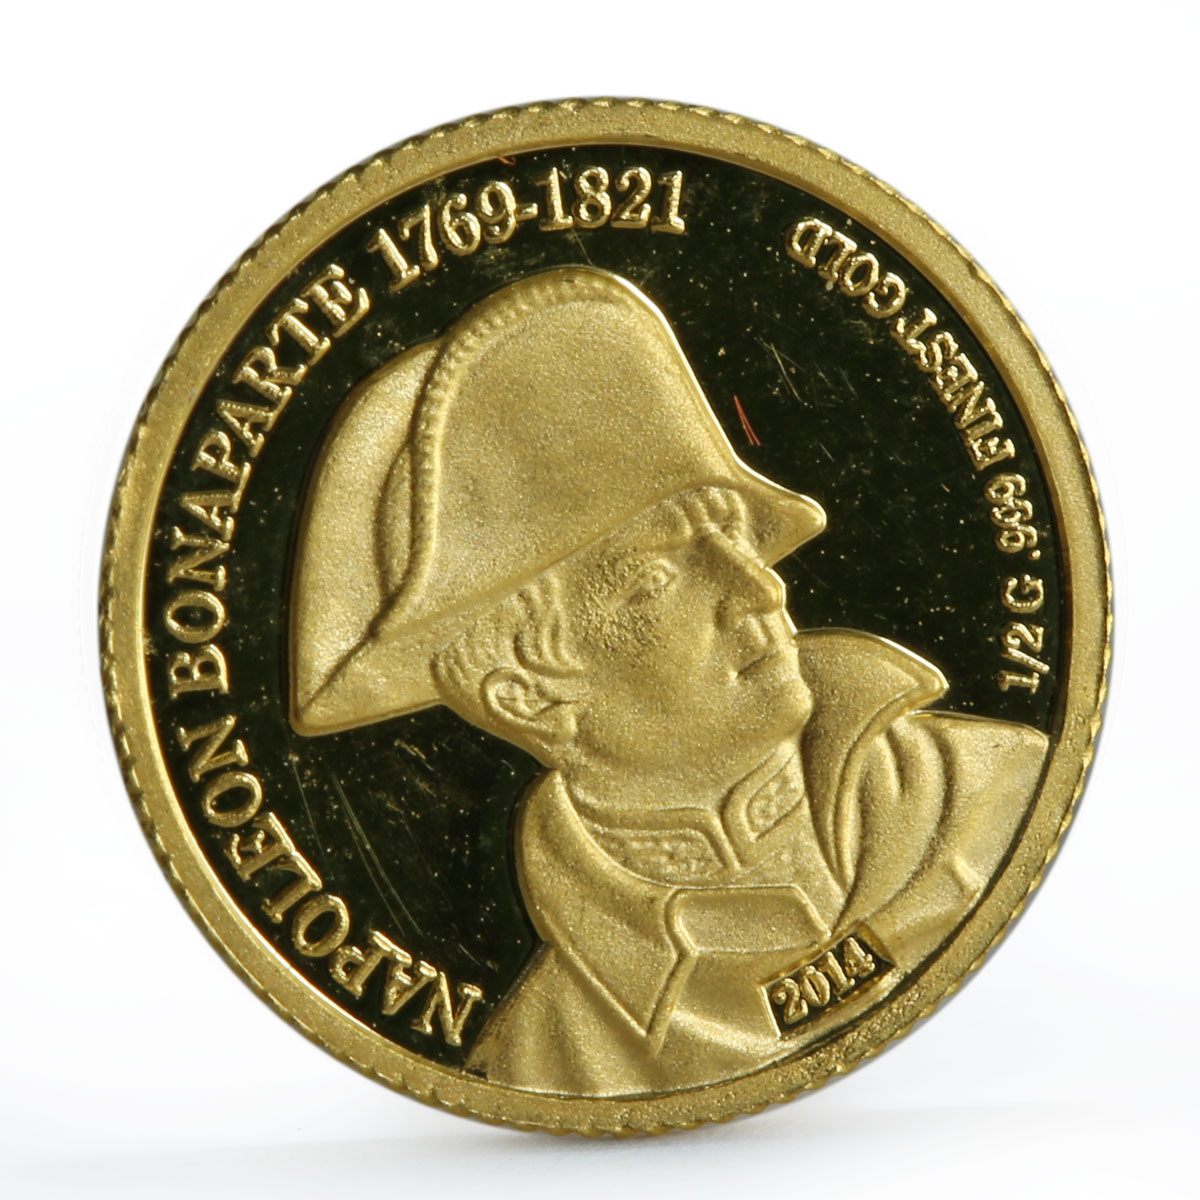 Niger 100 francs Emperor Napoleon Bonaparte proof gold coin 2014